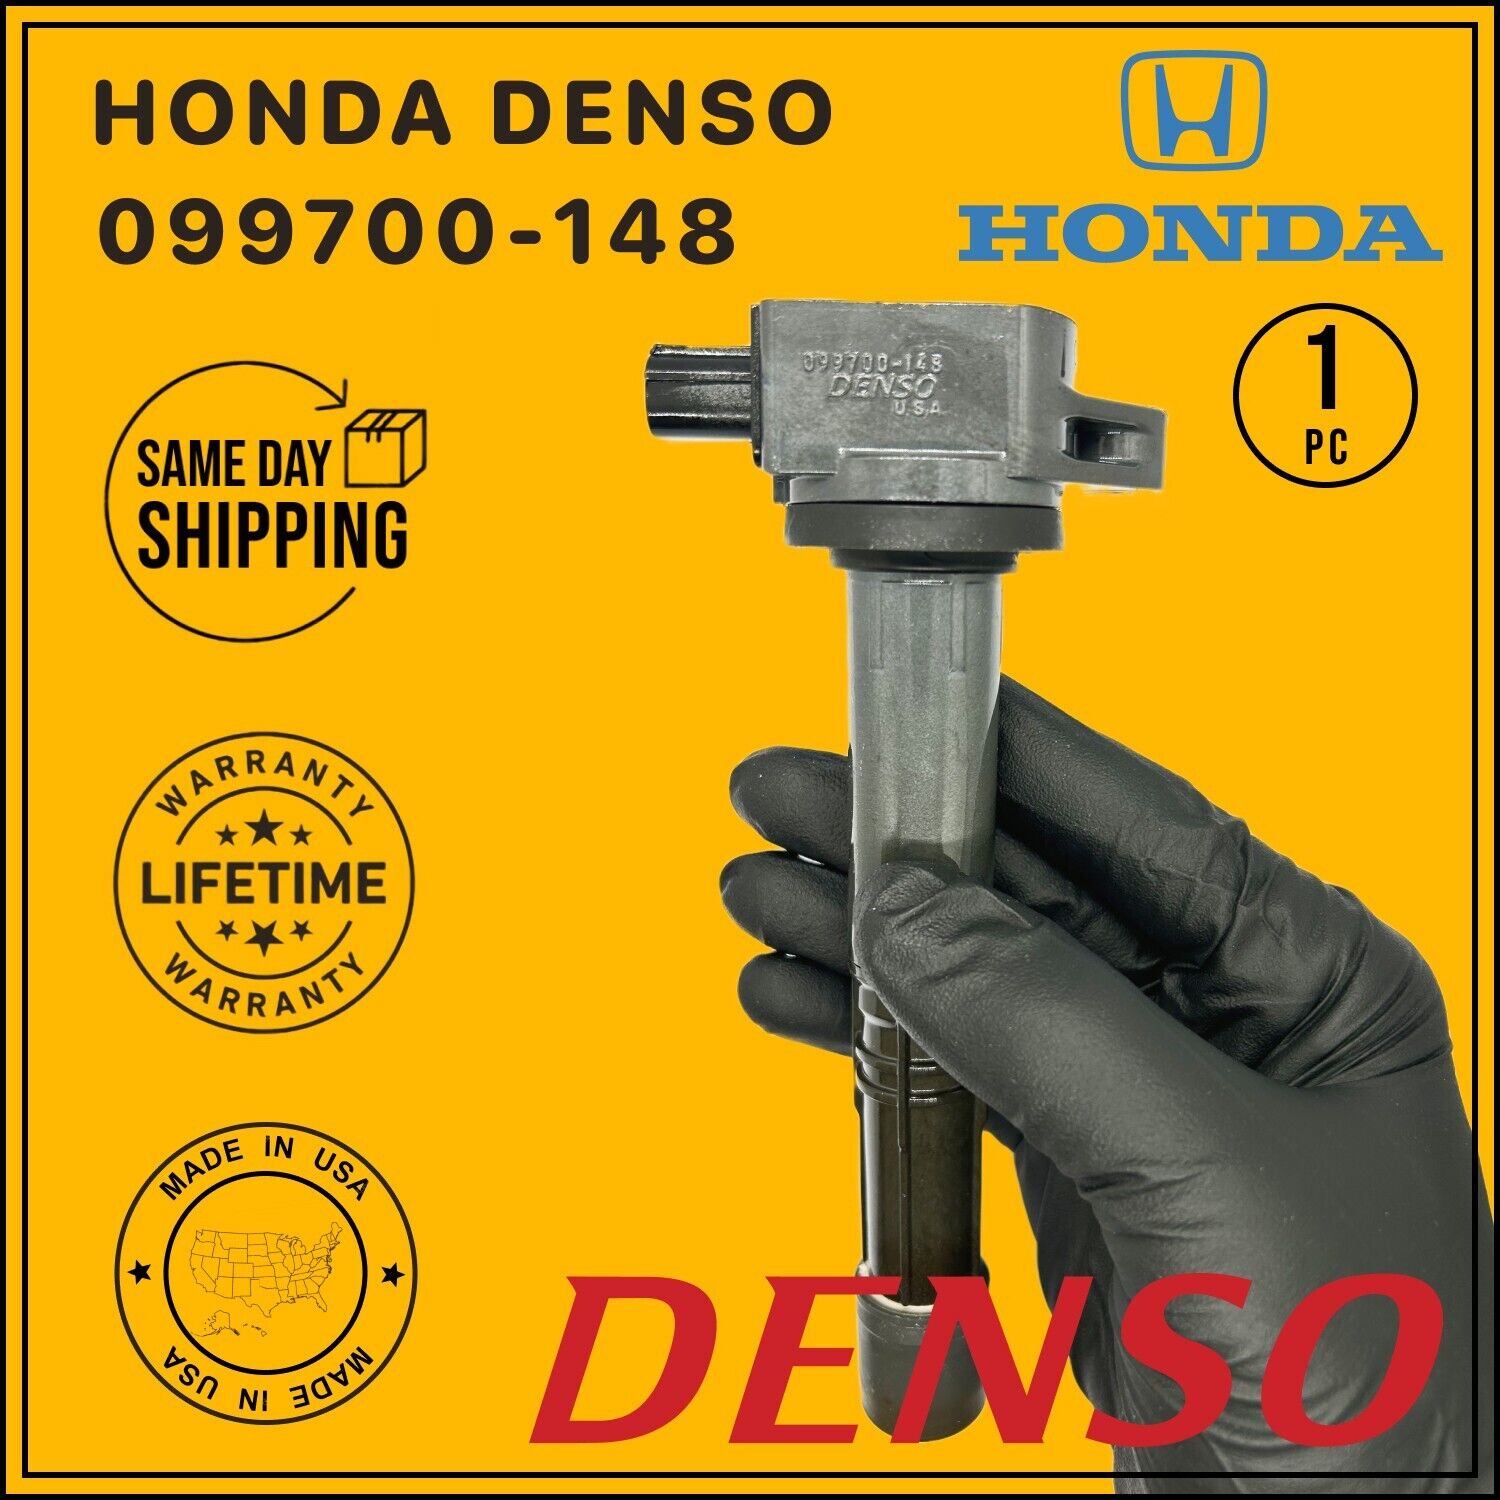 099700-148 Denso x1 Ignition Coil for 2008-2012 Honda Accord CR-V Civic 2.4L L4